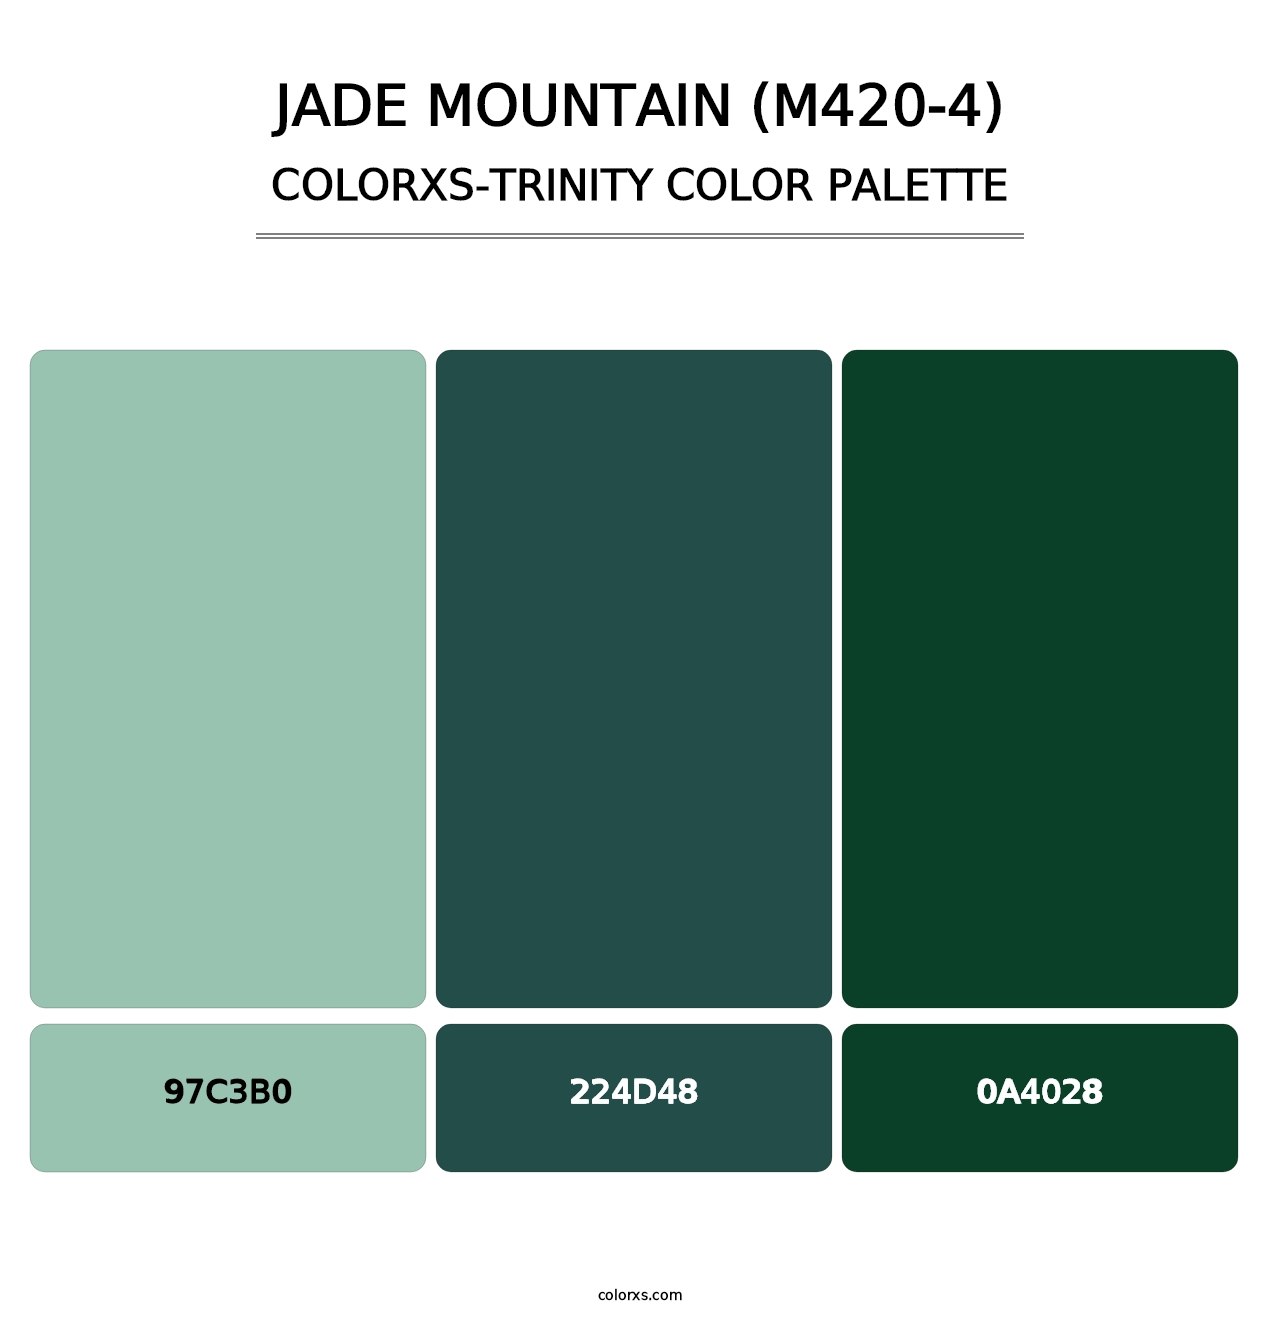 Jade Mountain (M420-4) - Colorxs Trinity Palette